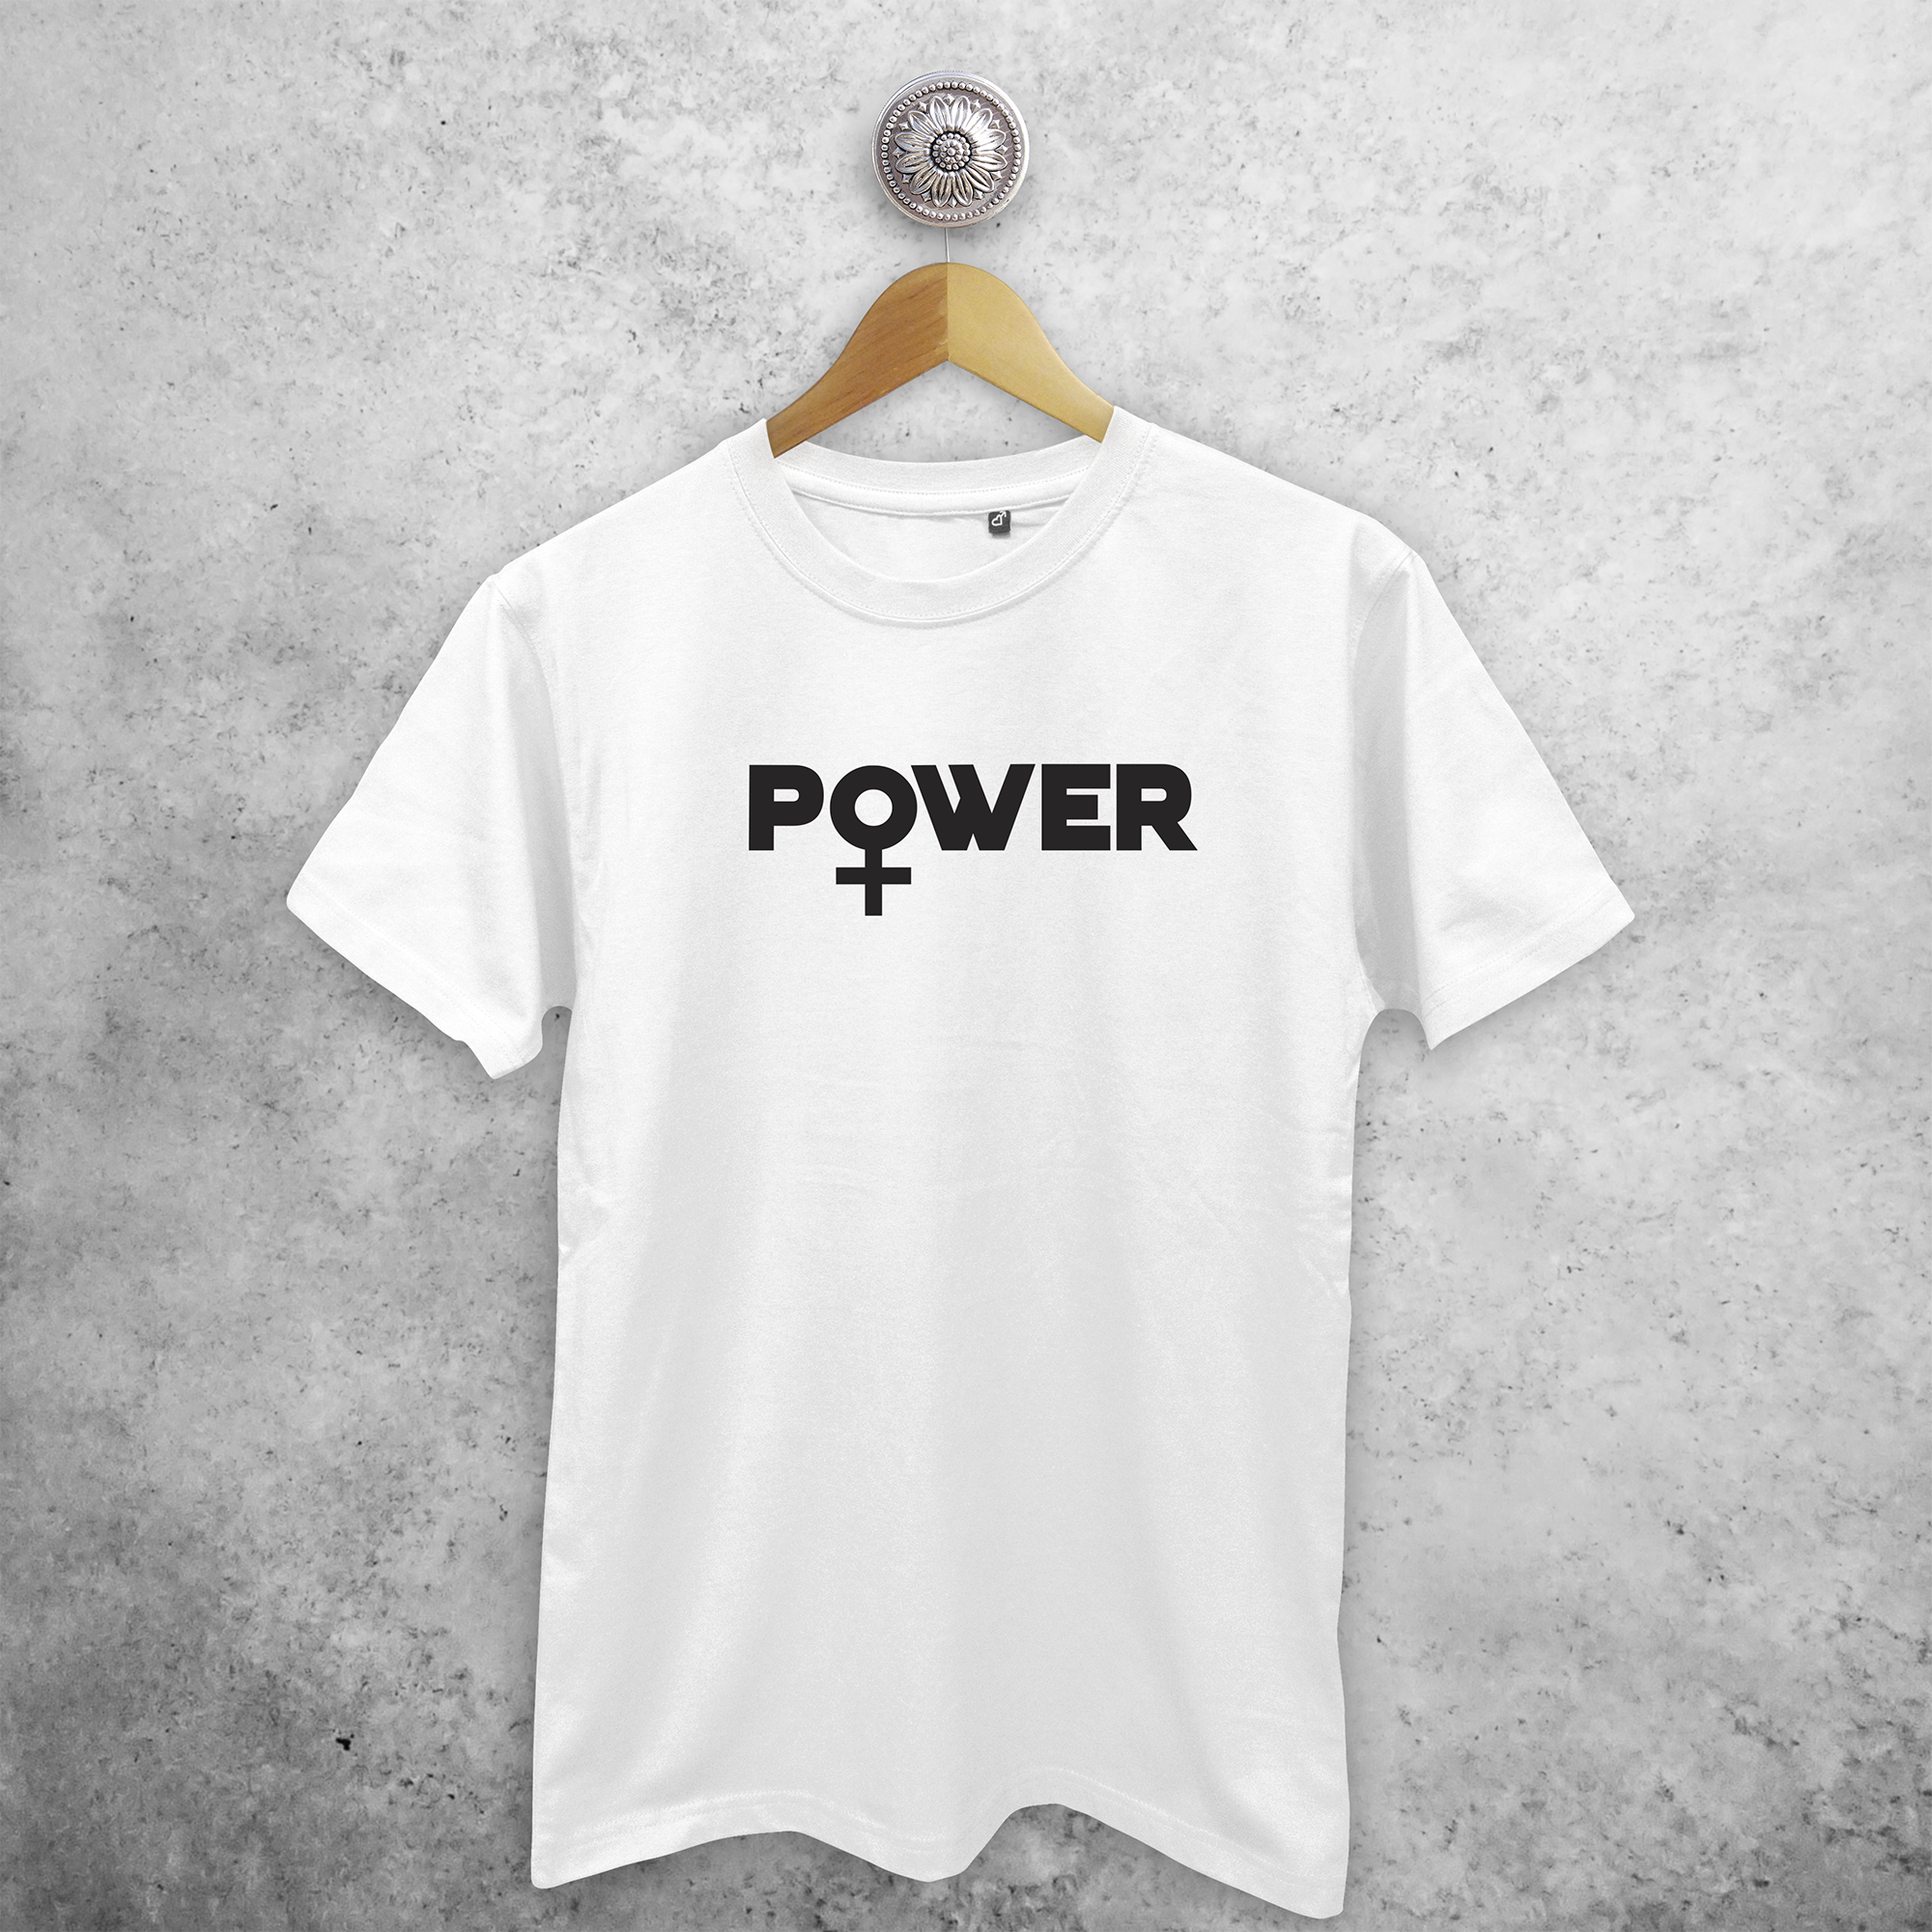 'Power' adult shirt